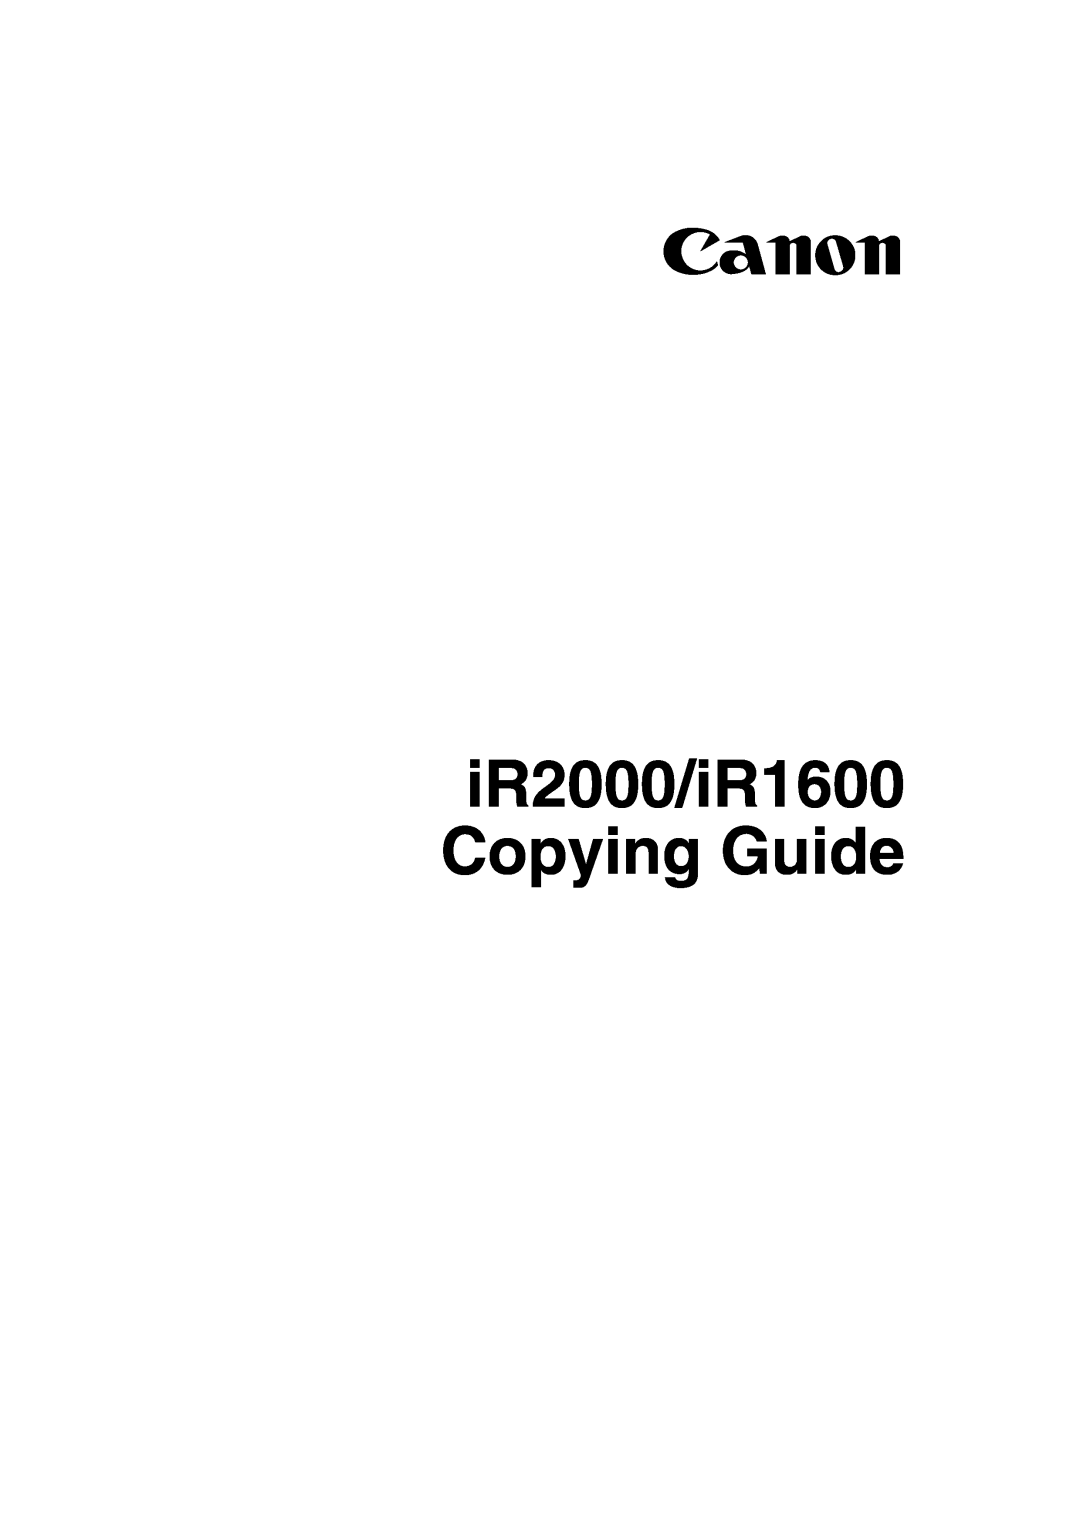 Canon IR1600 manual iR2000/iR1600 Copying Guide, Canon 